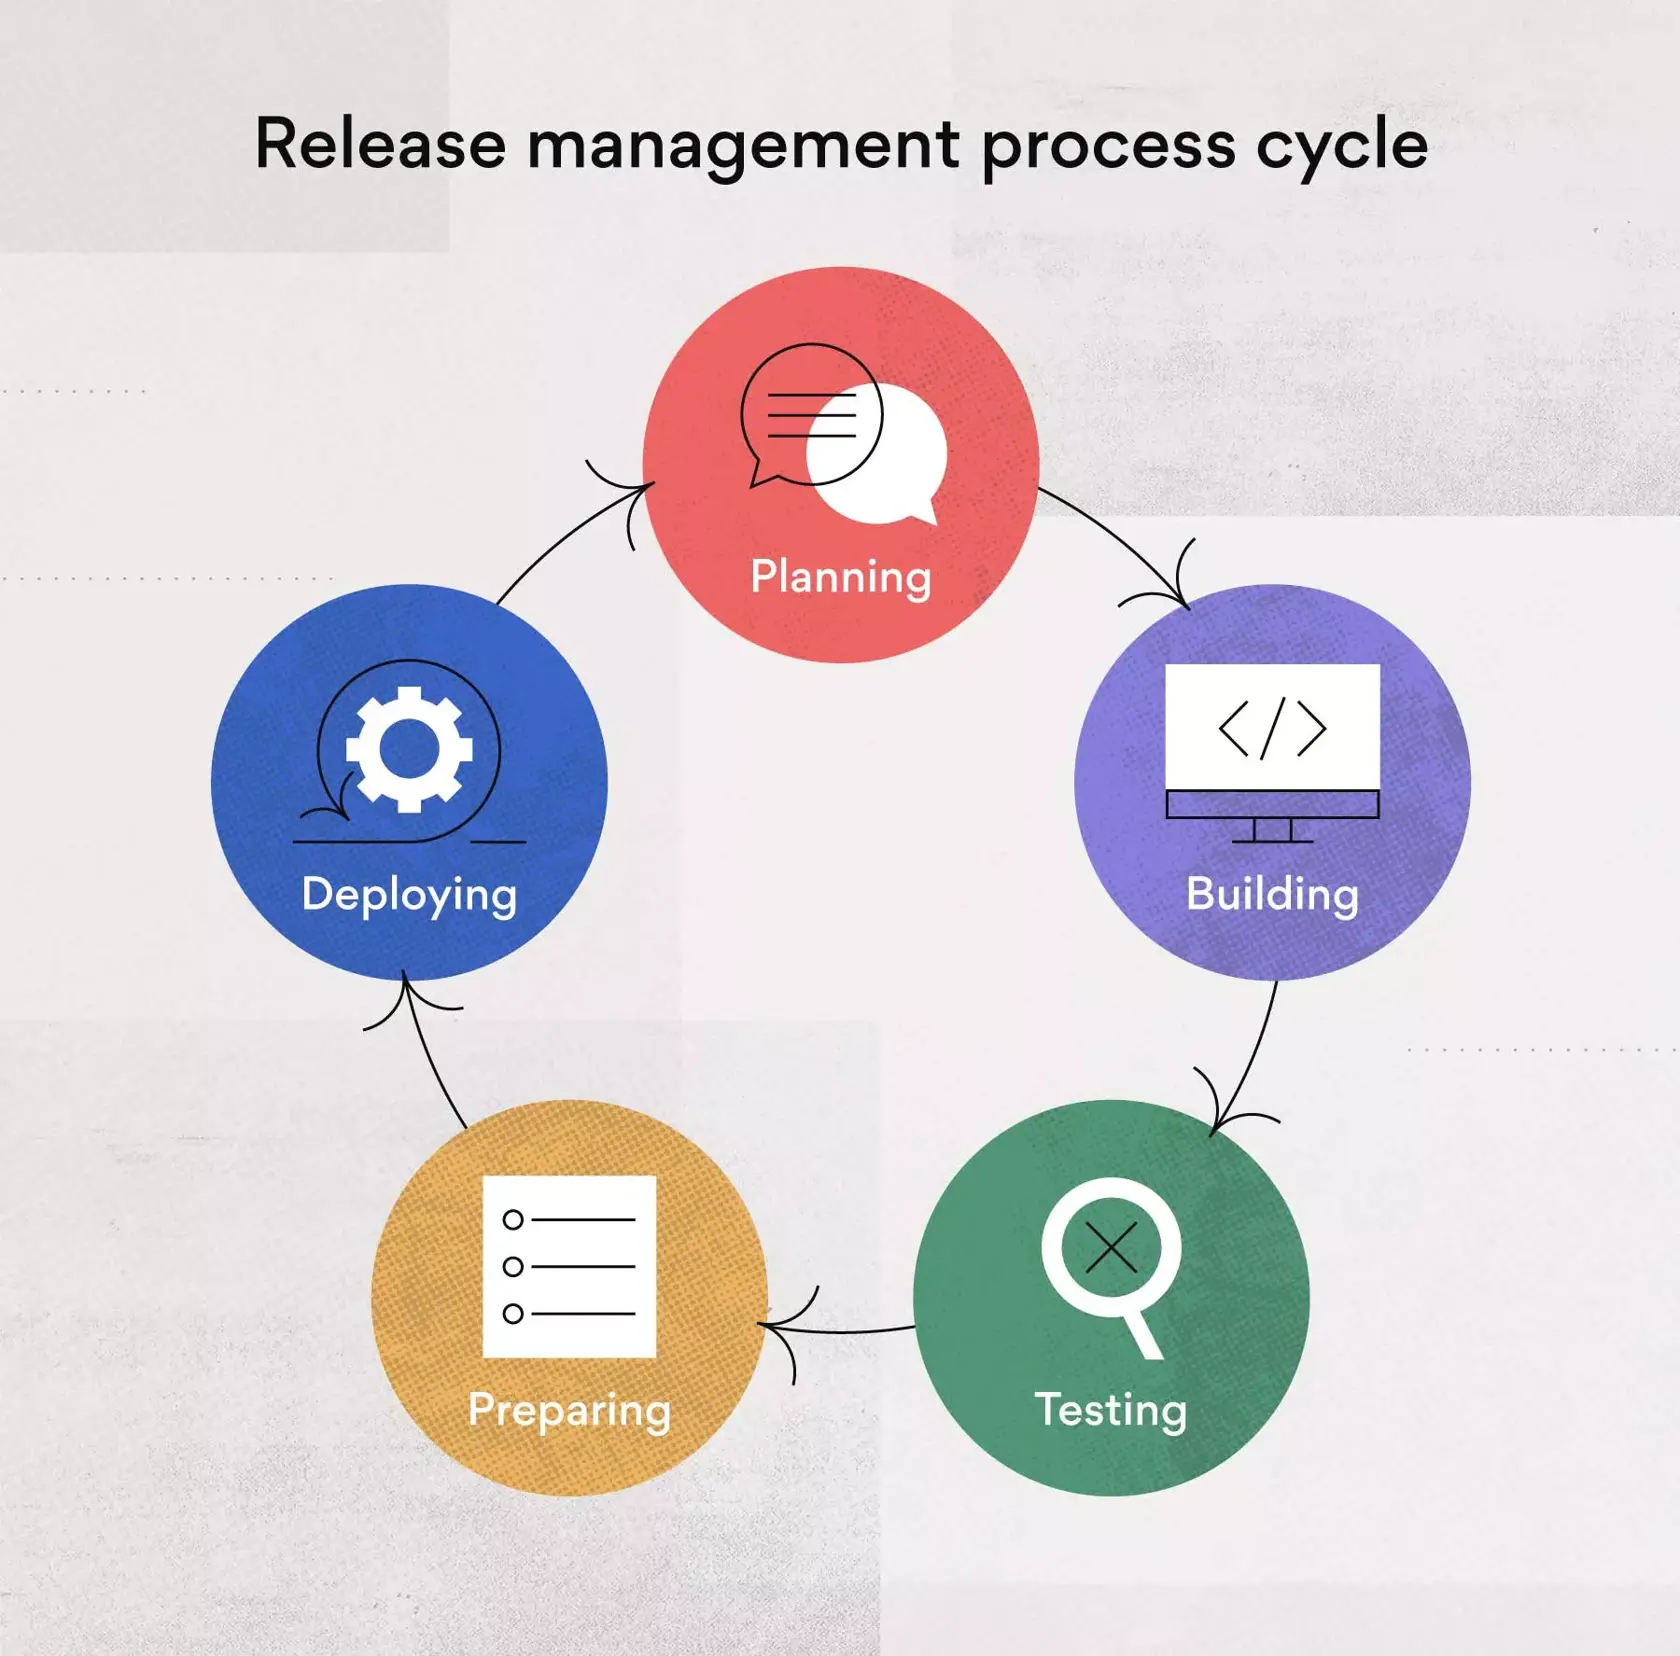 Siklus proses manajemen perilisan